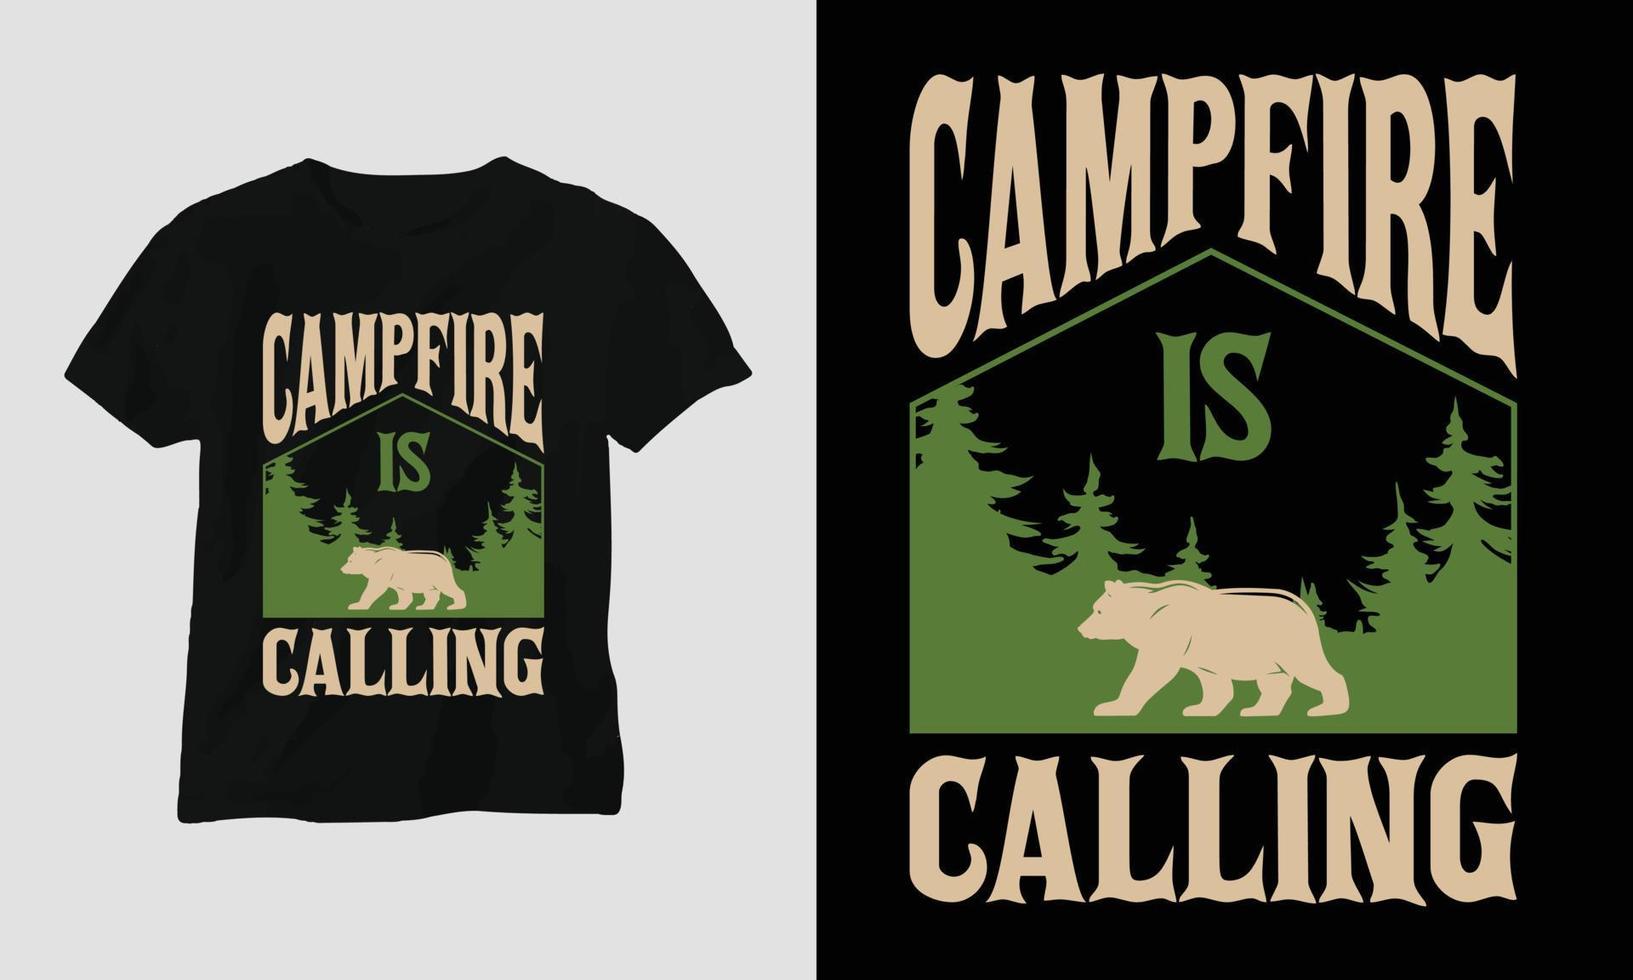 feu de camp appelle - conception de t-shirt de camping vecteur